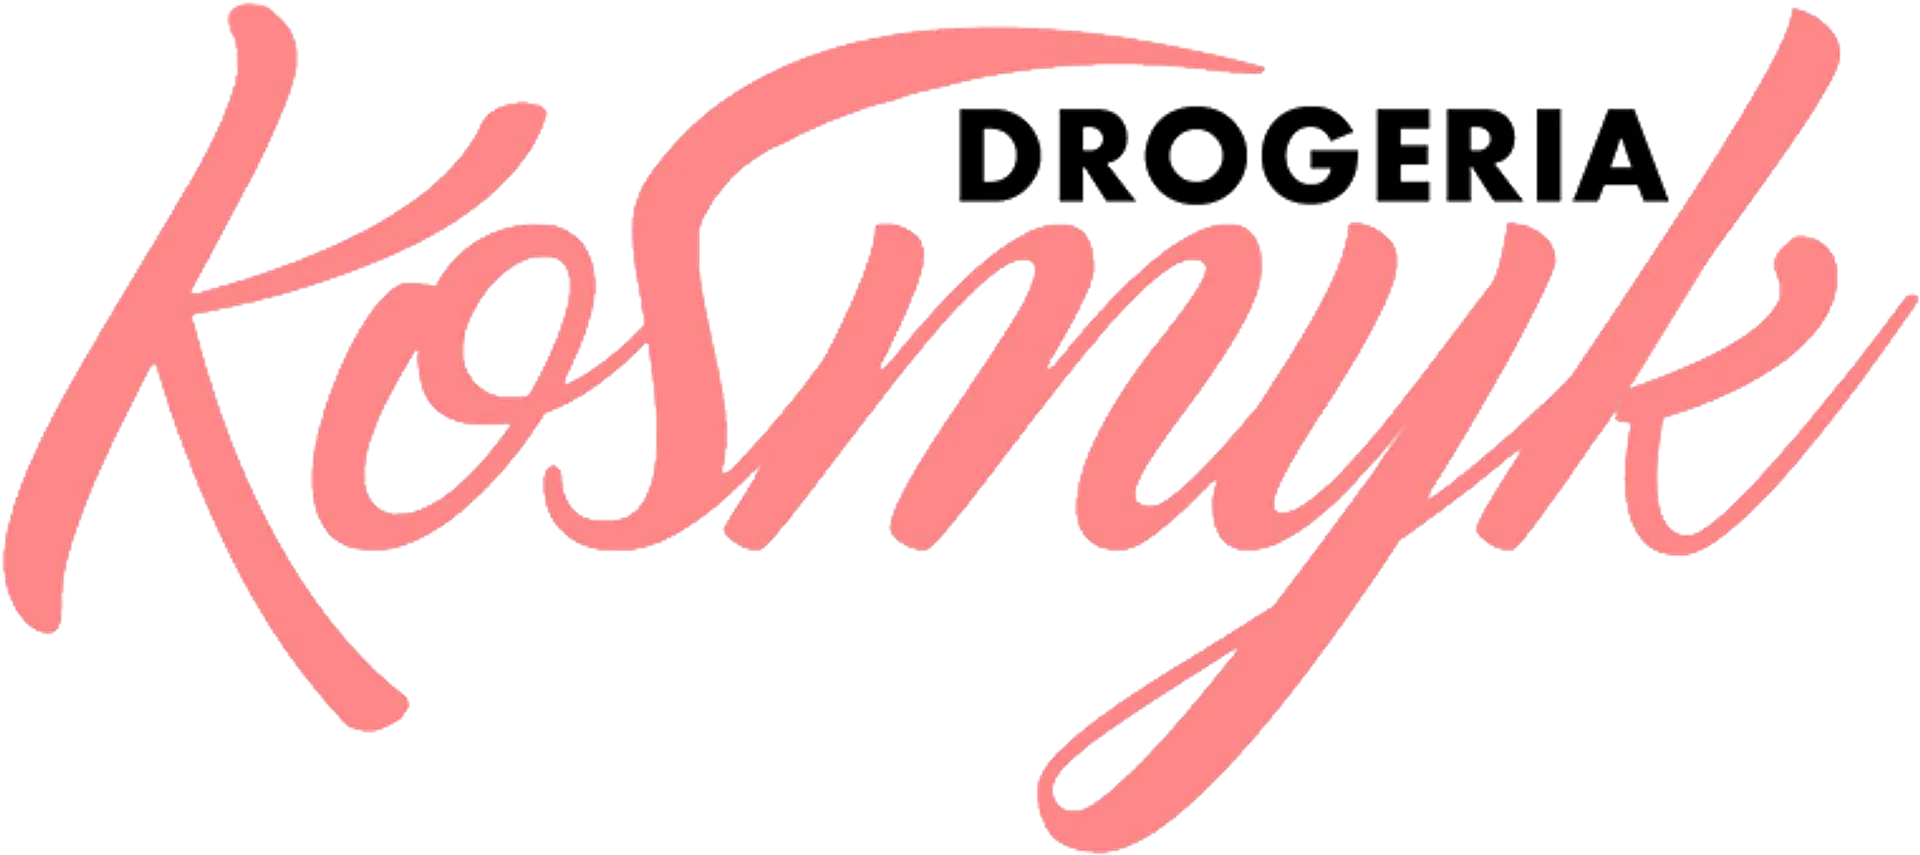  DROGERII KOSMYK logo